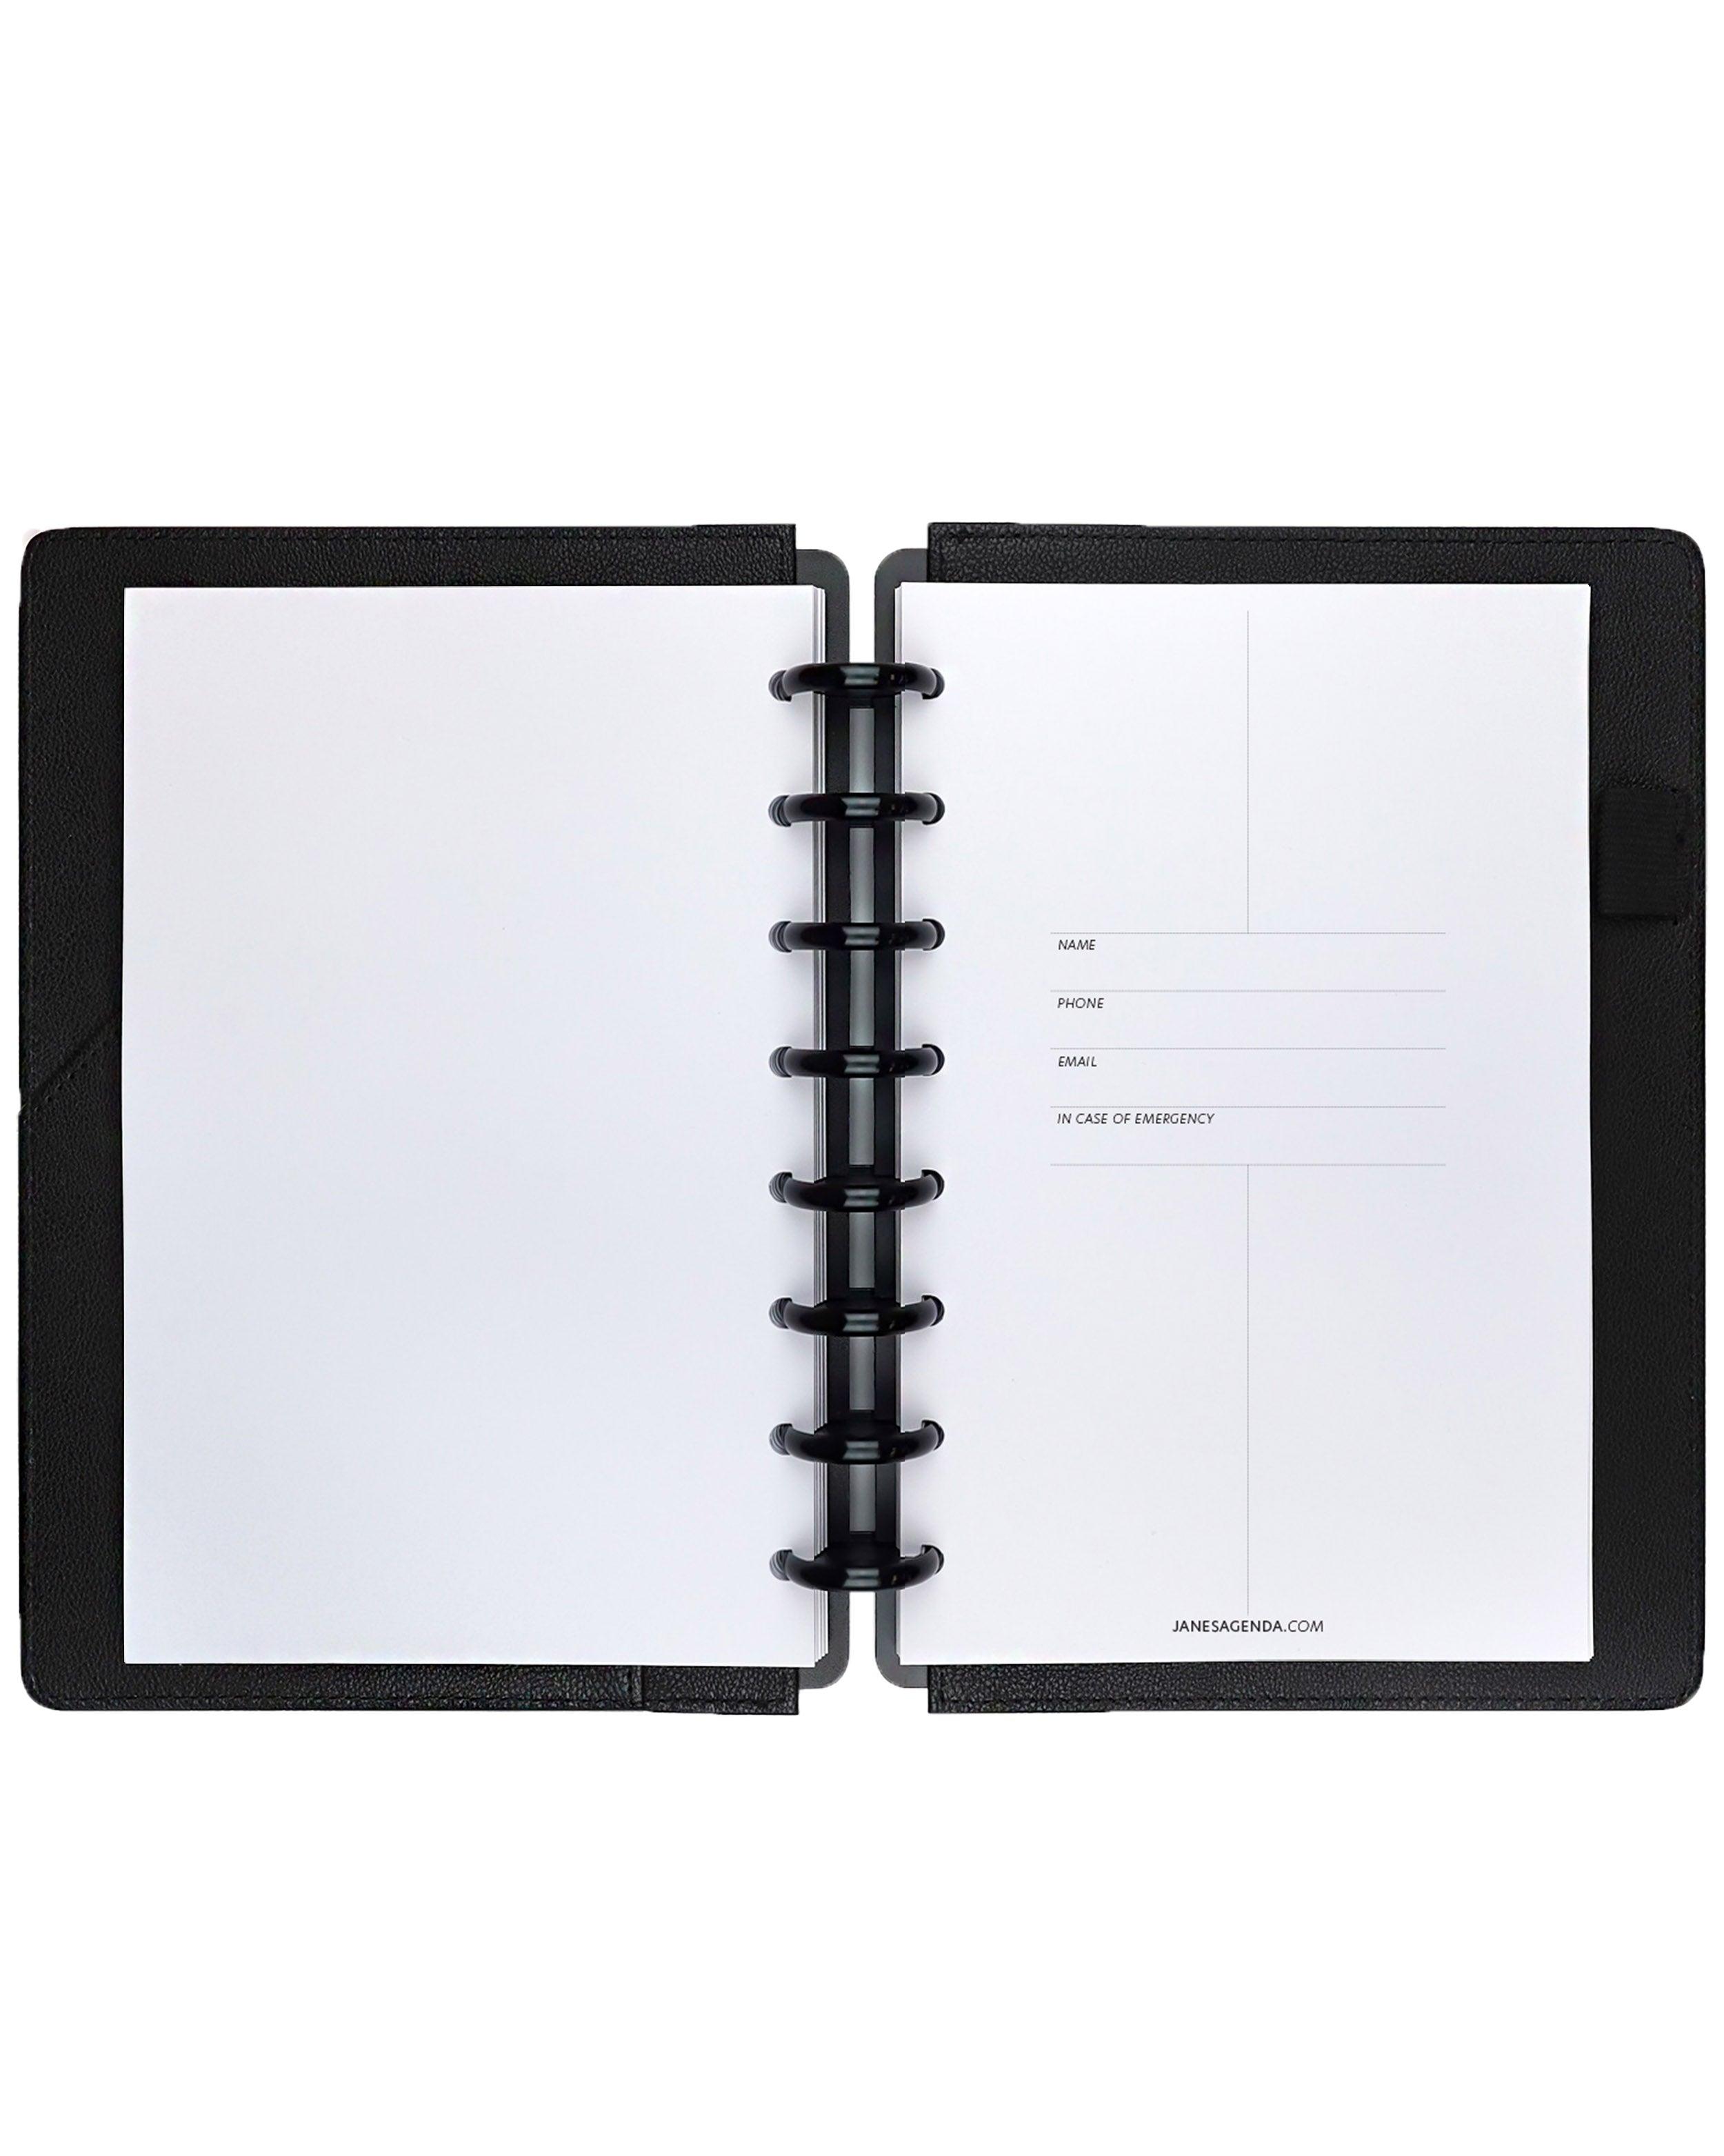 I Love Office Supplies: Arc Notebook and AvantPro pen review - Road  Warriorette